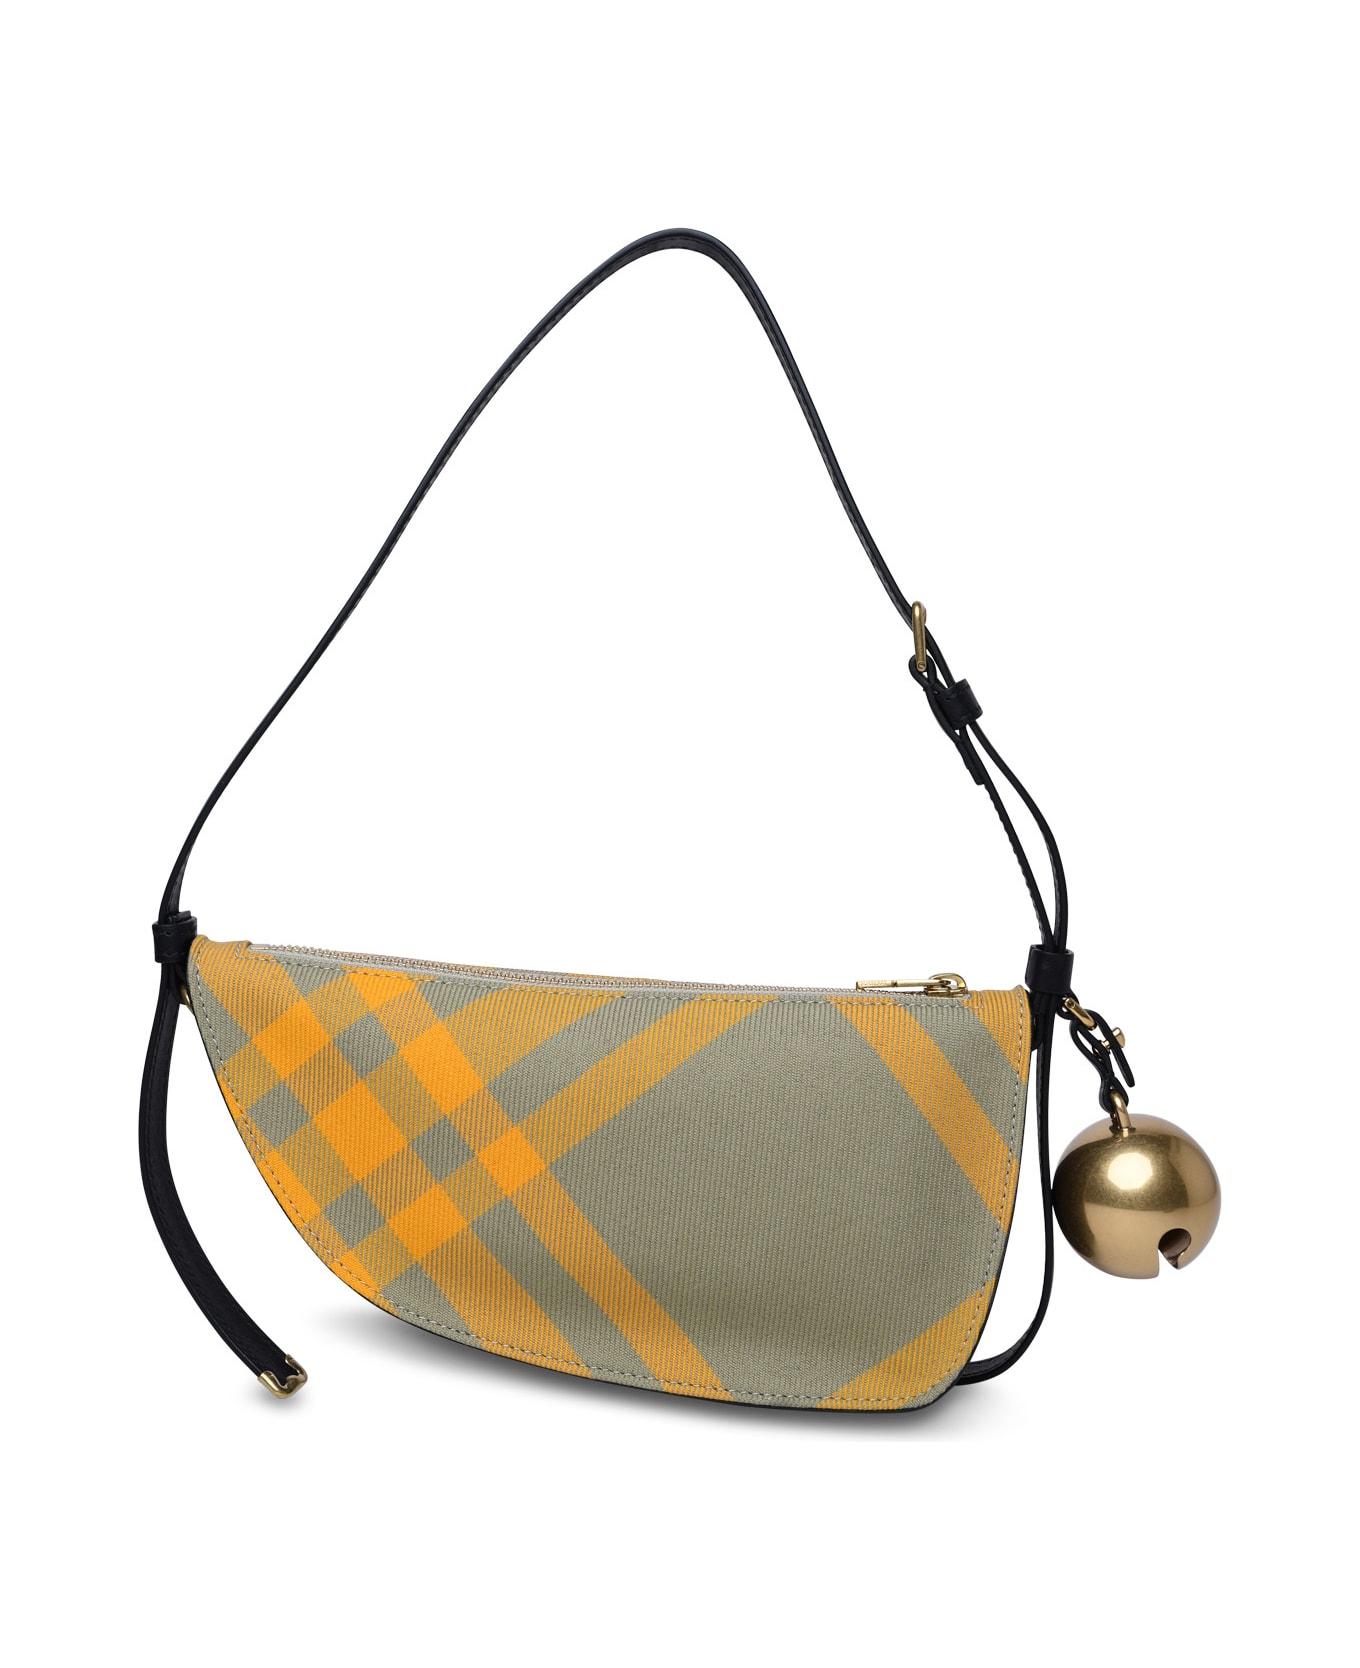 Burberry 'shield' Multicolor Wool Blend Bag - HUNTER IP CHECK トートバッグ